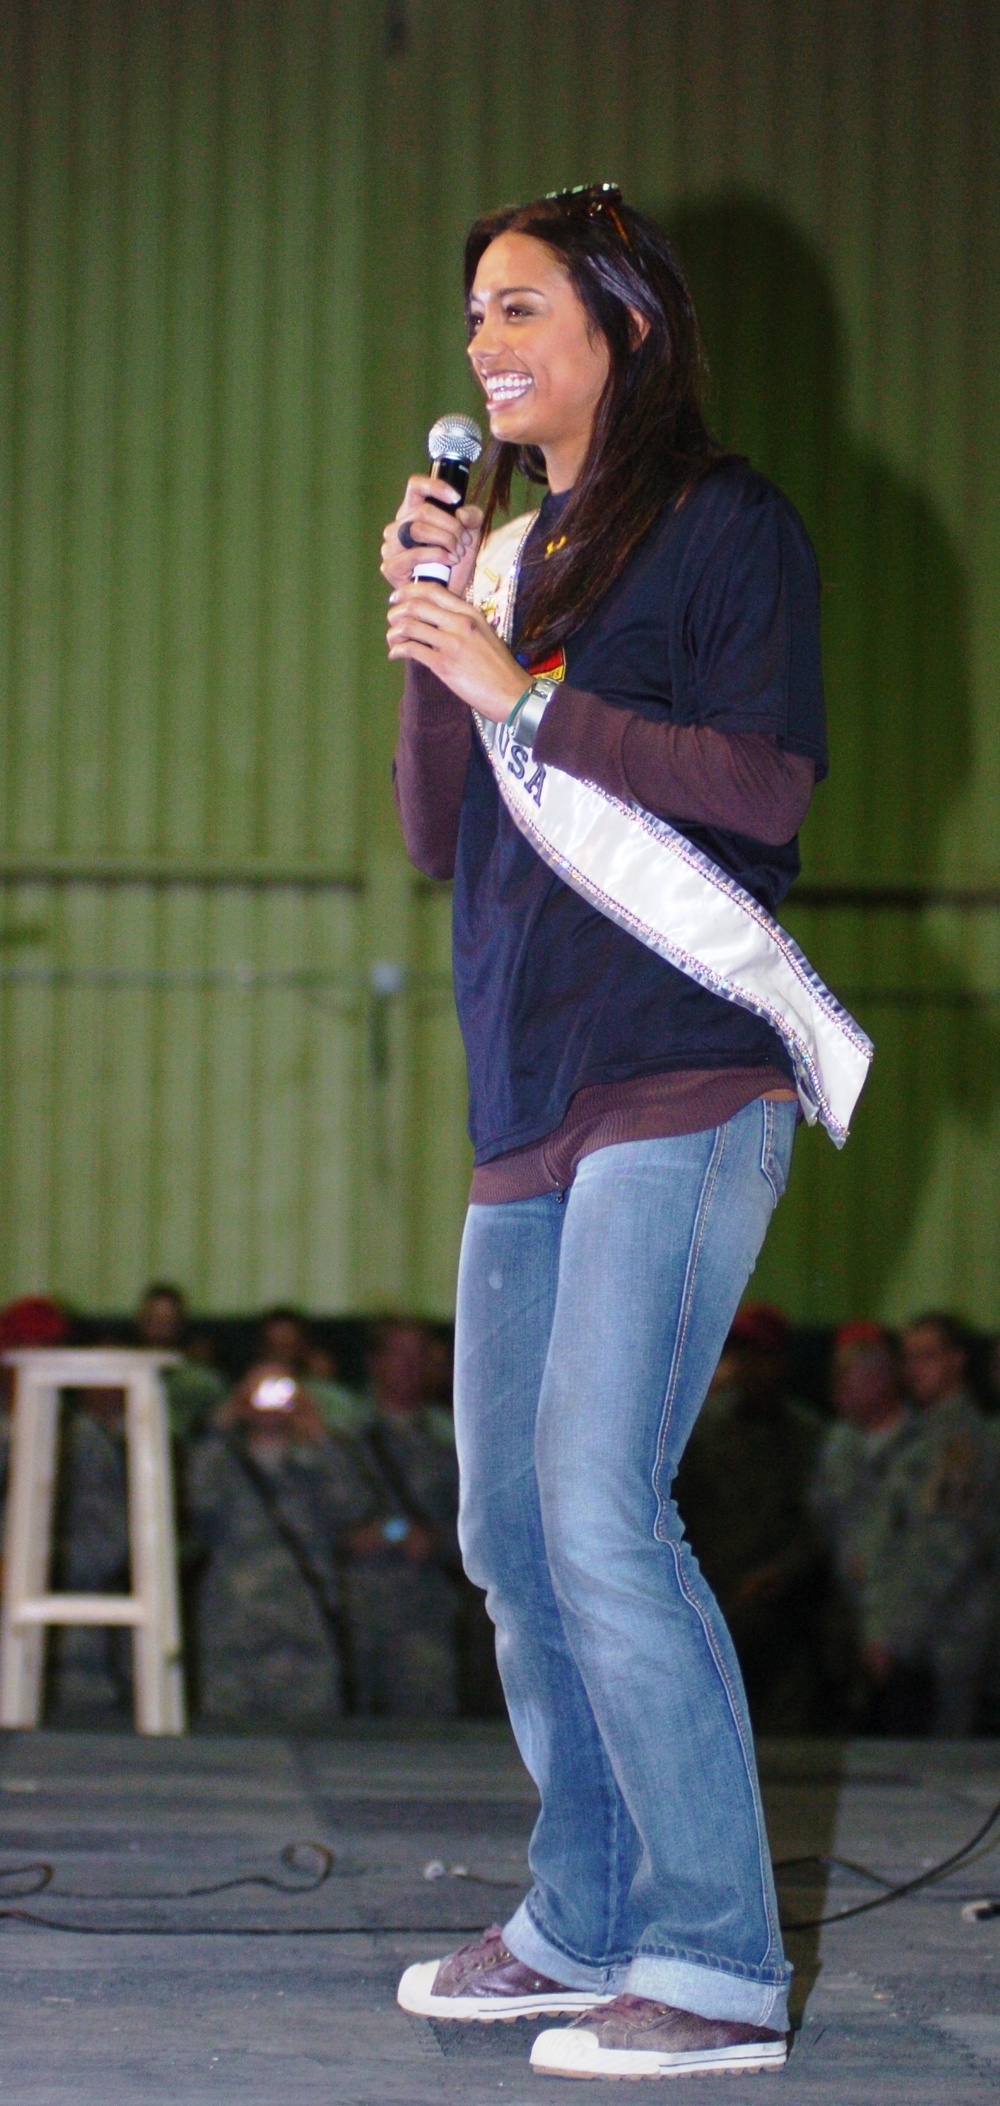 Miss USA Meets Bastogne Soldiers in Iraq